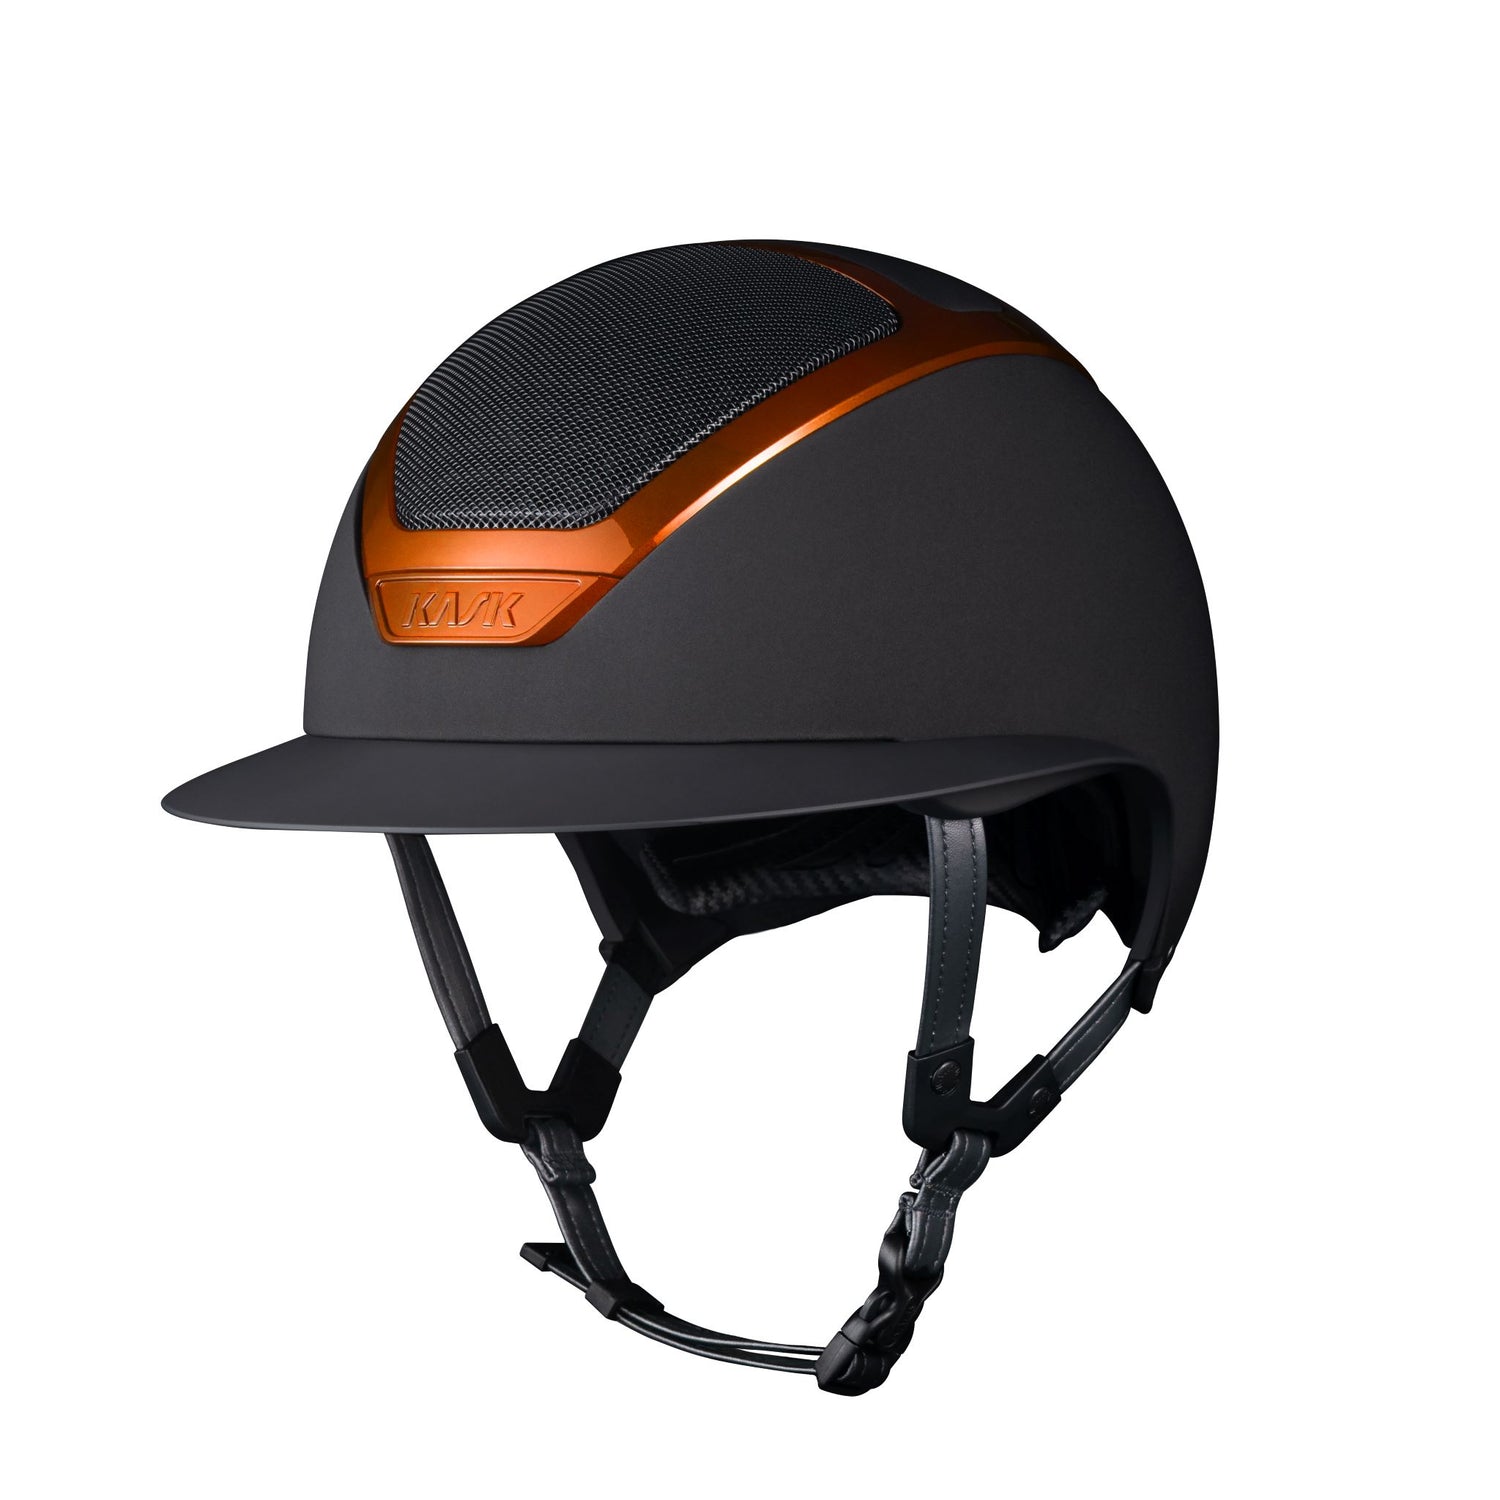 Equestrian helmet with orange